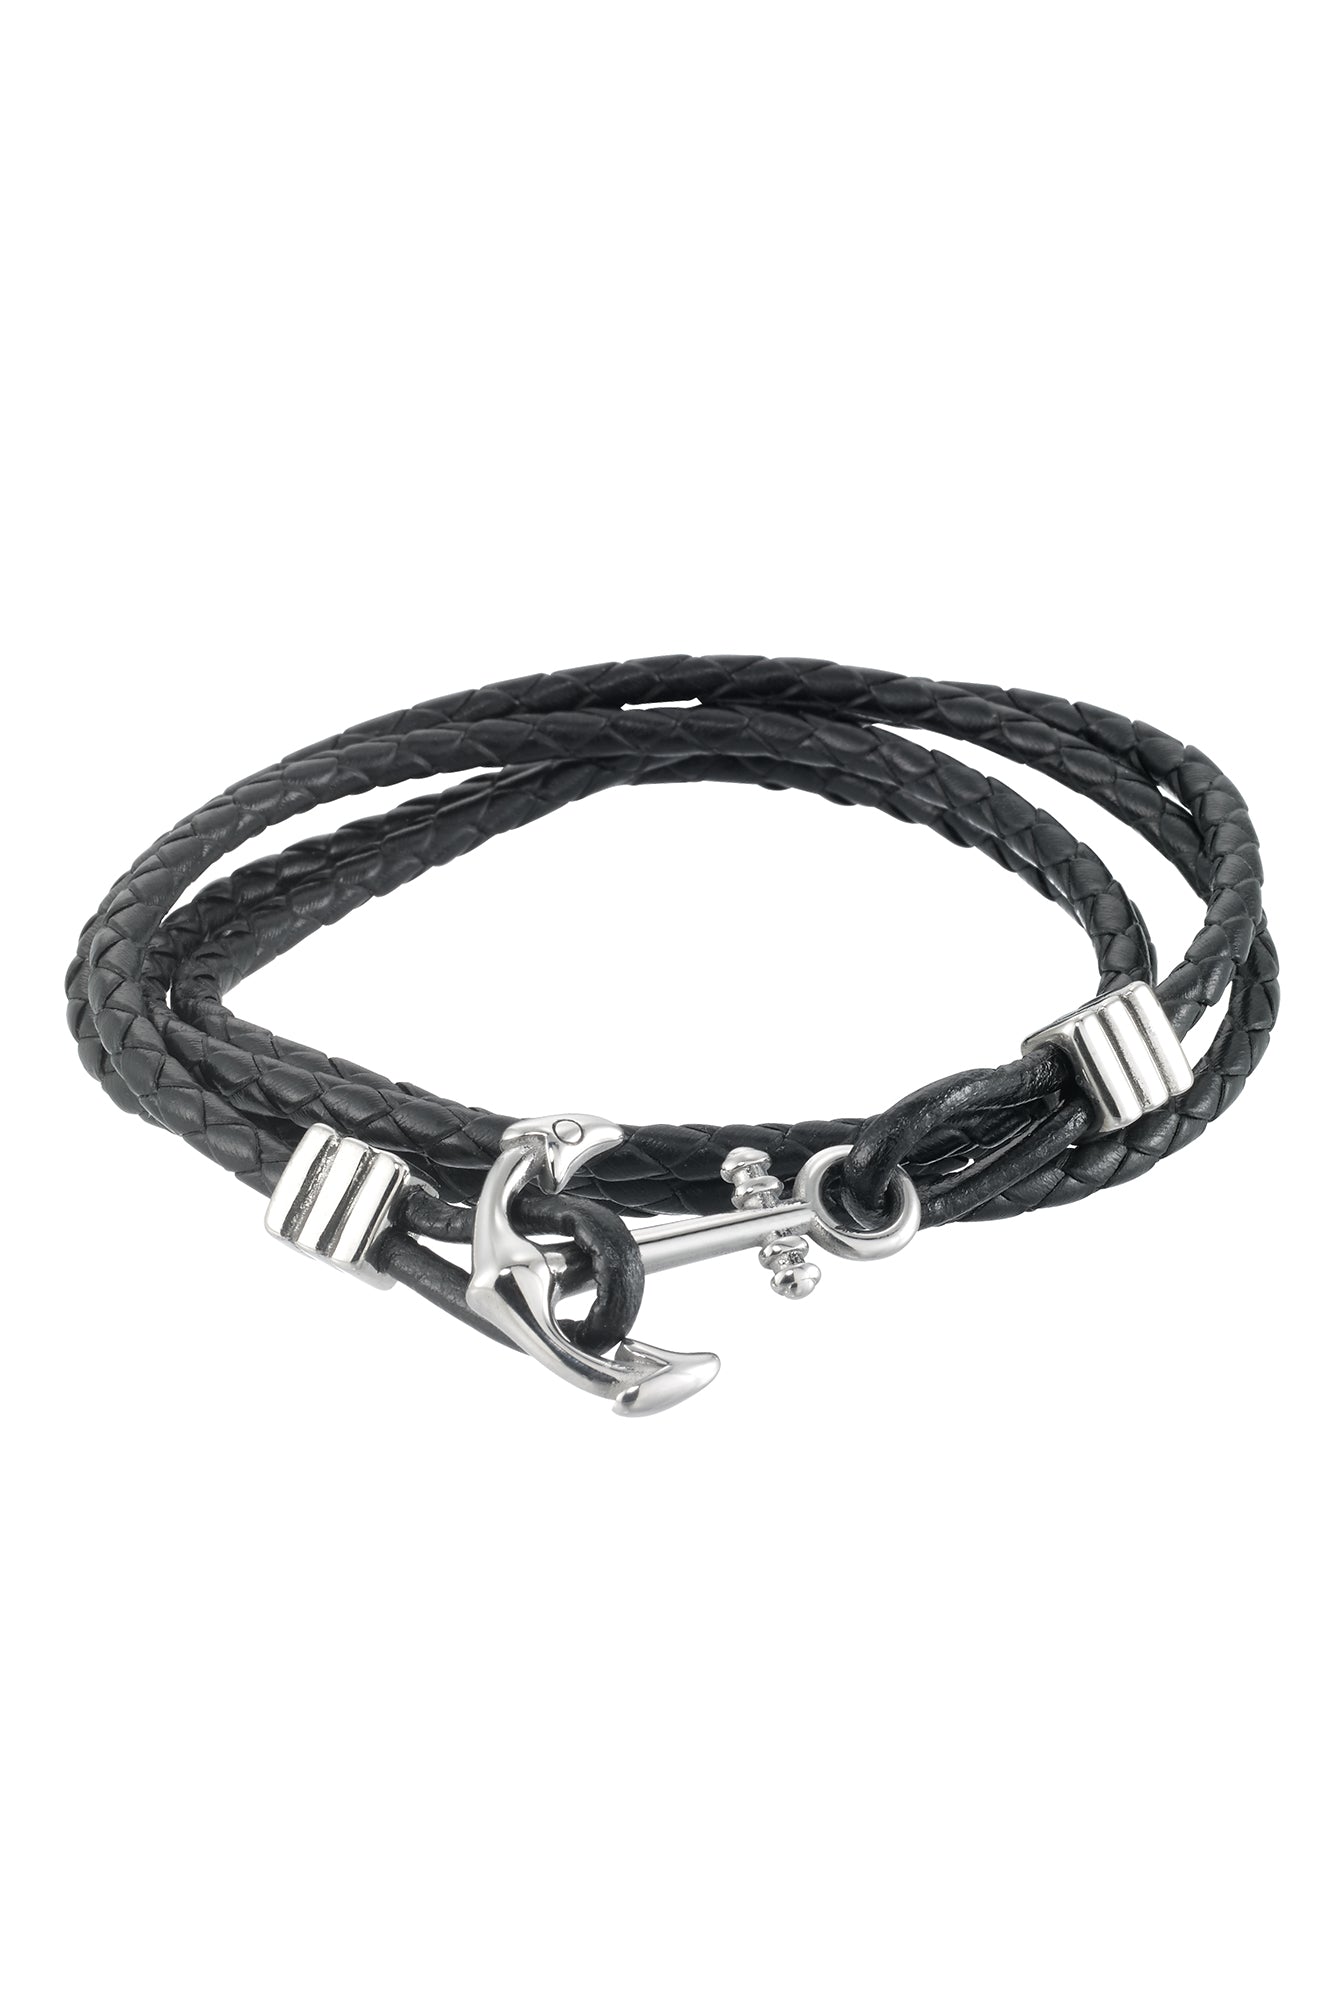 Amazon.com: WAINIS 6 Pack Mens Black Leather Bracelets Set for Men  Stackable Braided Cuff Bracelet Tribal Punk Rock Handmade Wristband:  Clothing, Shoes & Jewelry